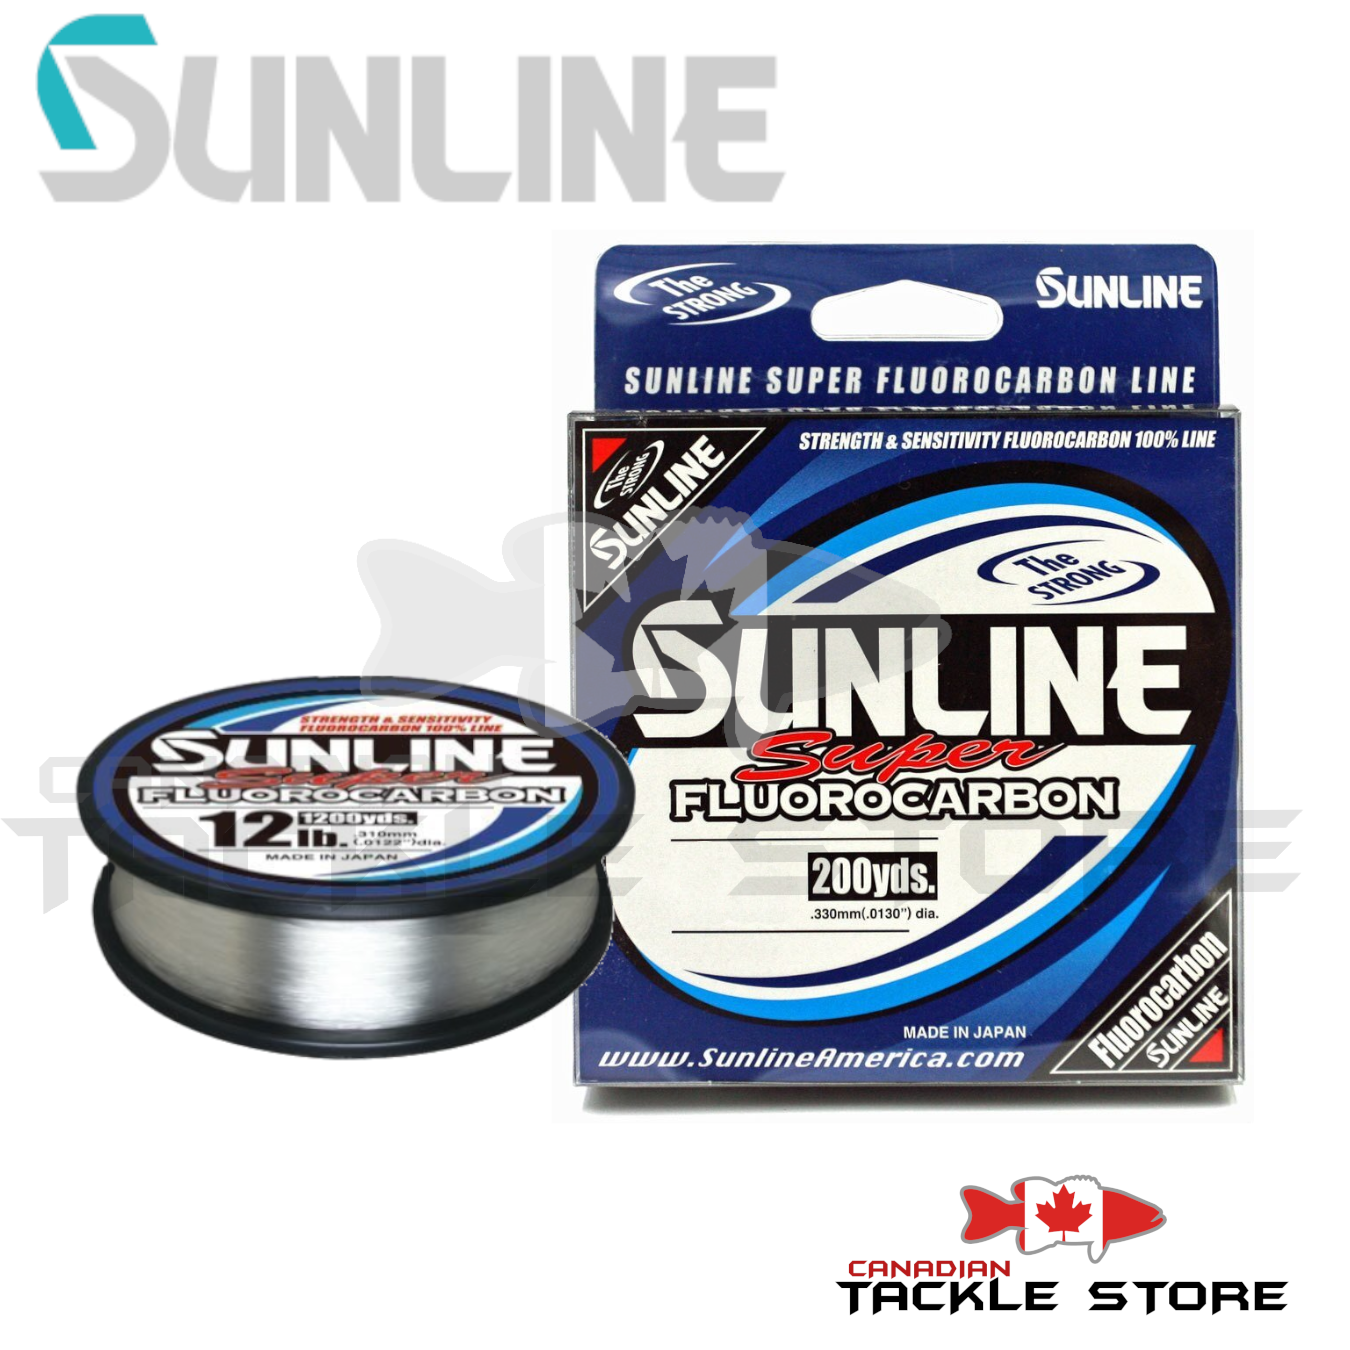 Sunline Super Fluorocarbon Line – Canadian Tackle Store